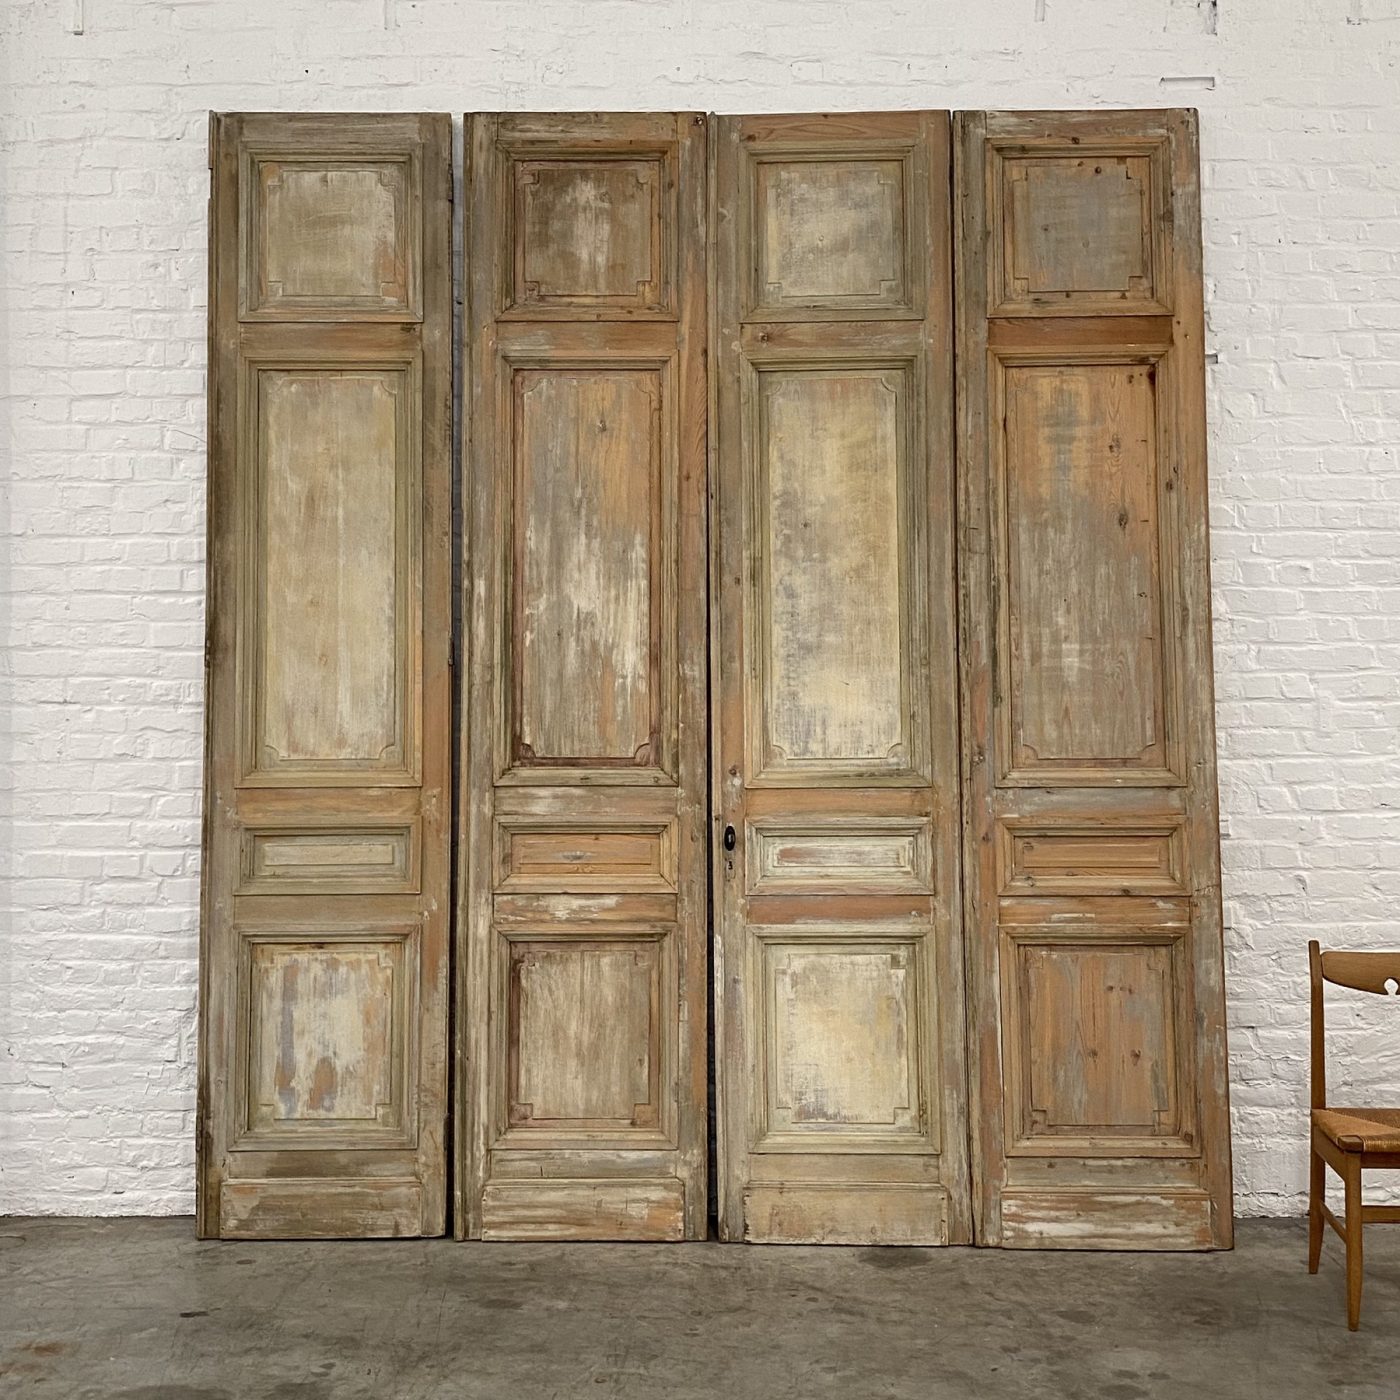 objet-vagabond-painted-doors0005